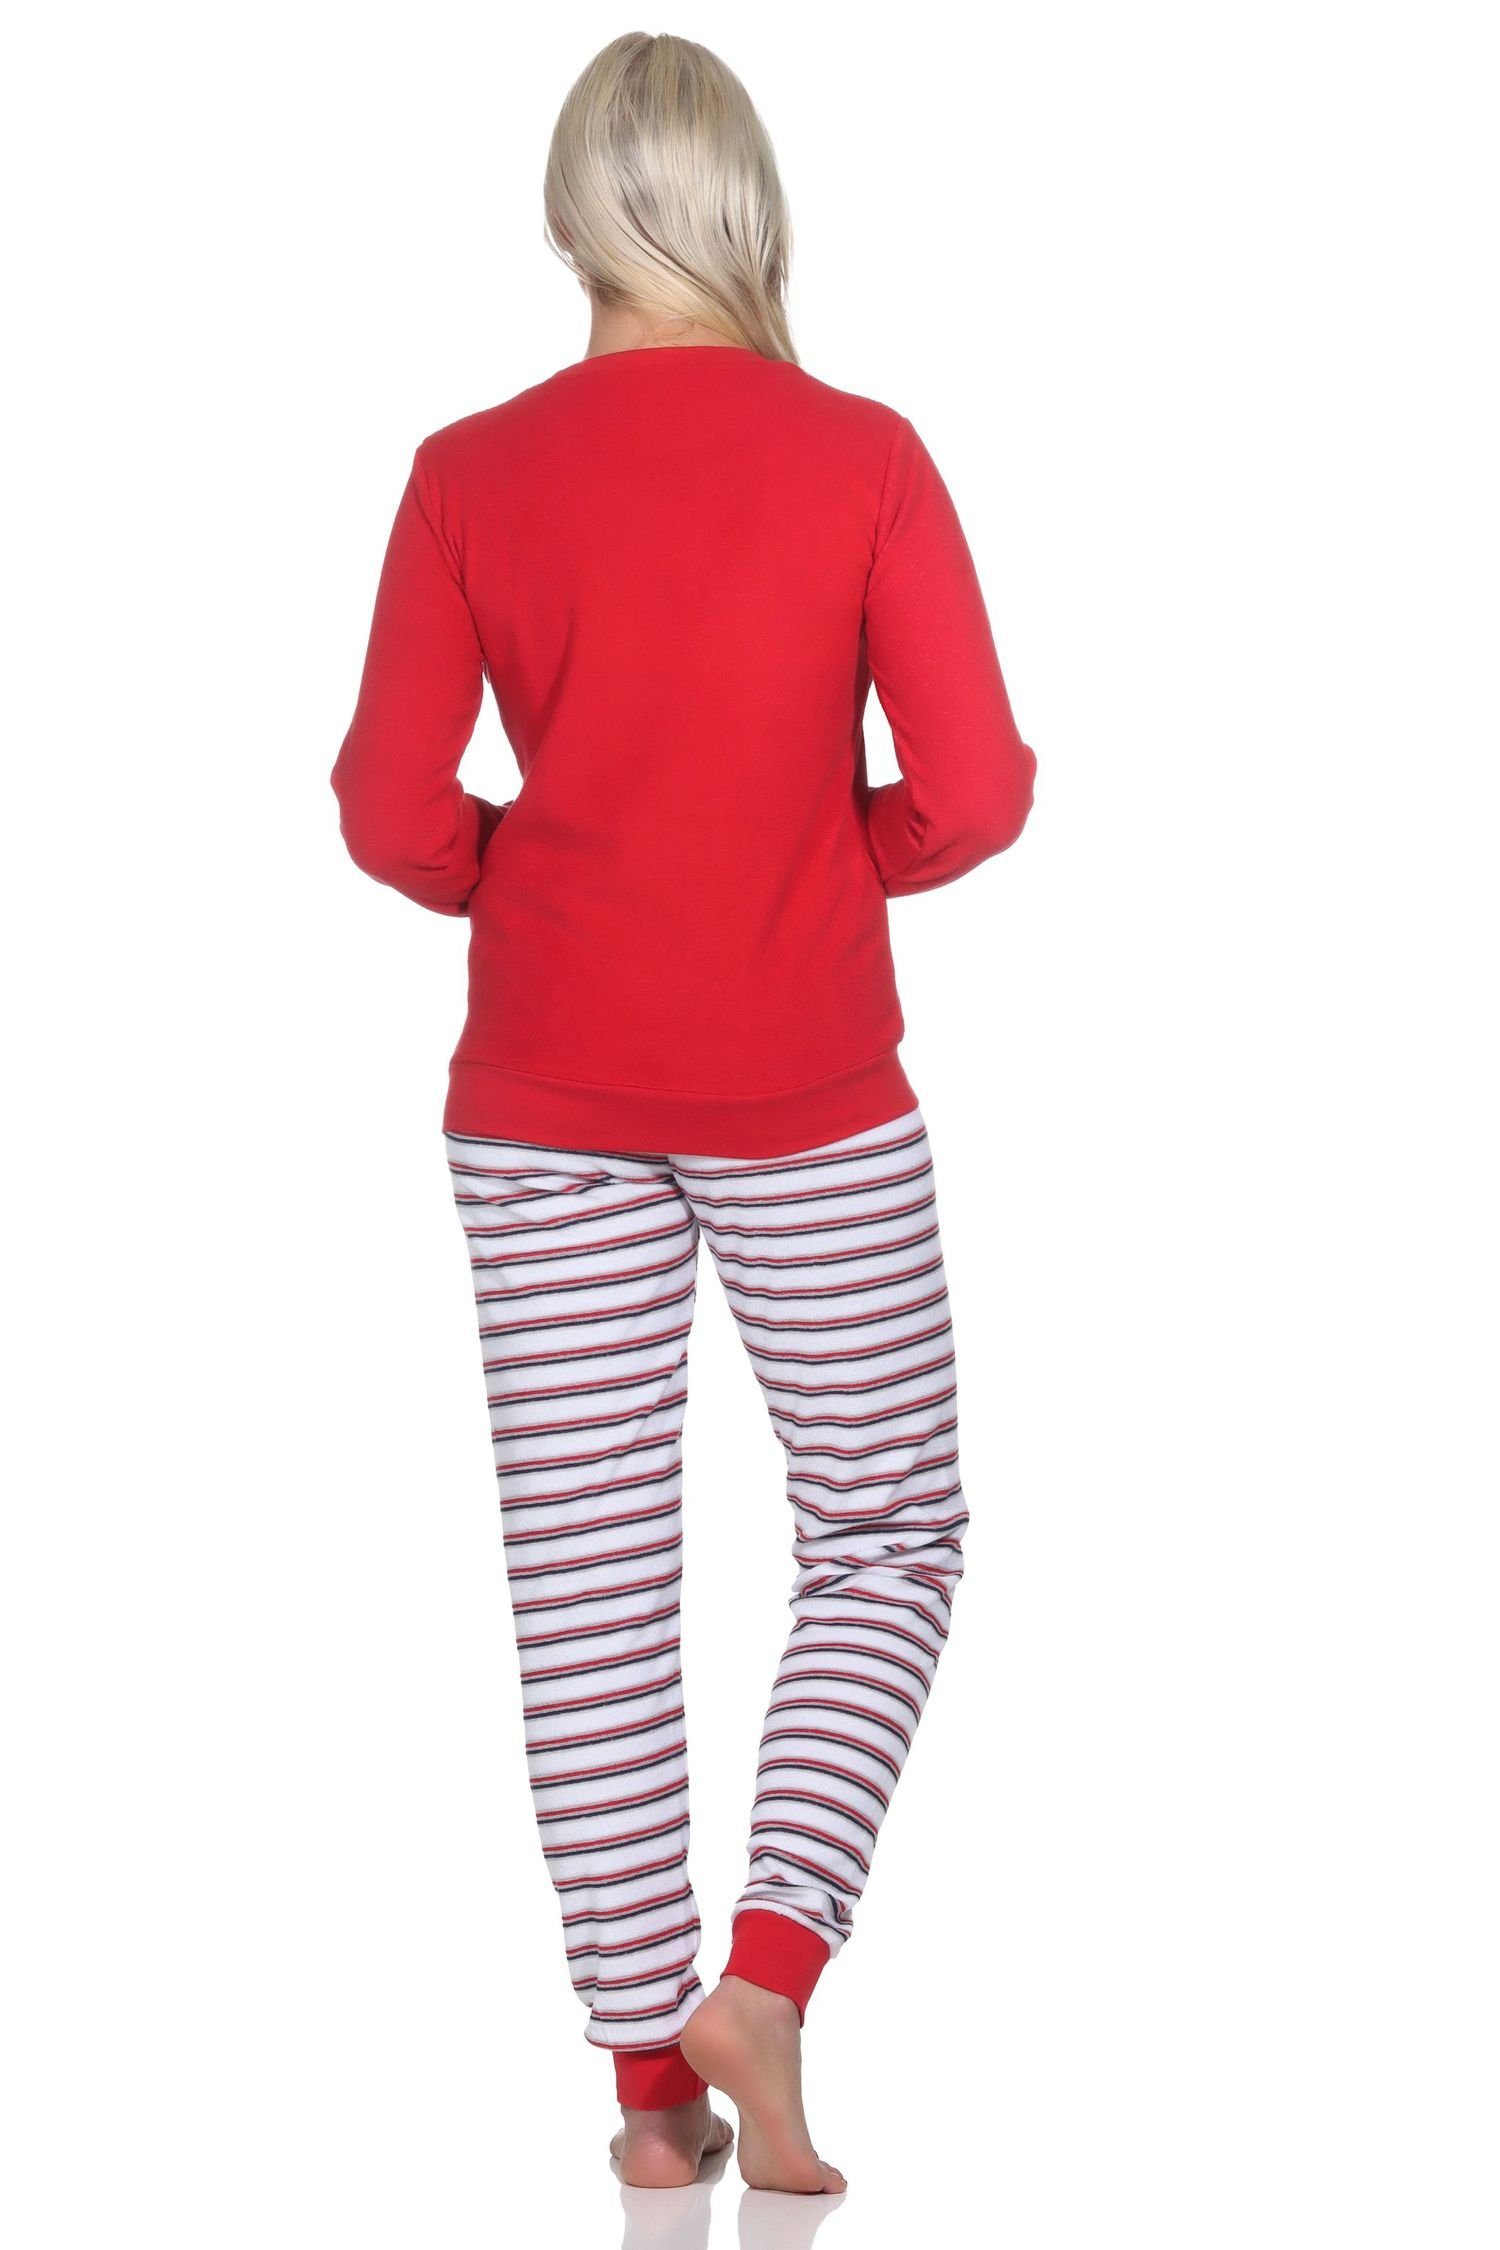 Tiermotiv gestreift, mit rot1 Oberteil Hose Normann Damen Frottee süssen Pyjama Pyjama,